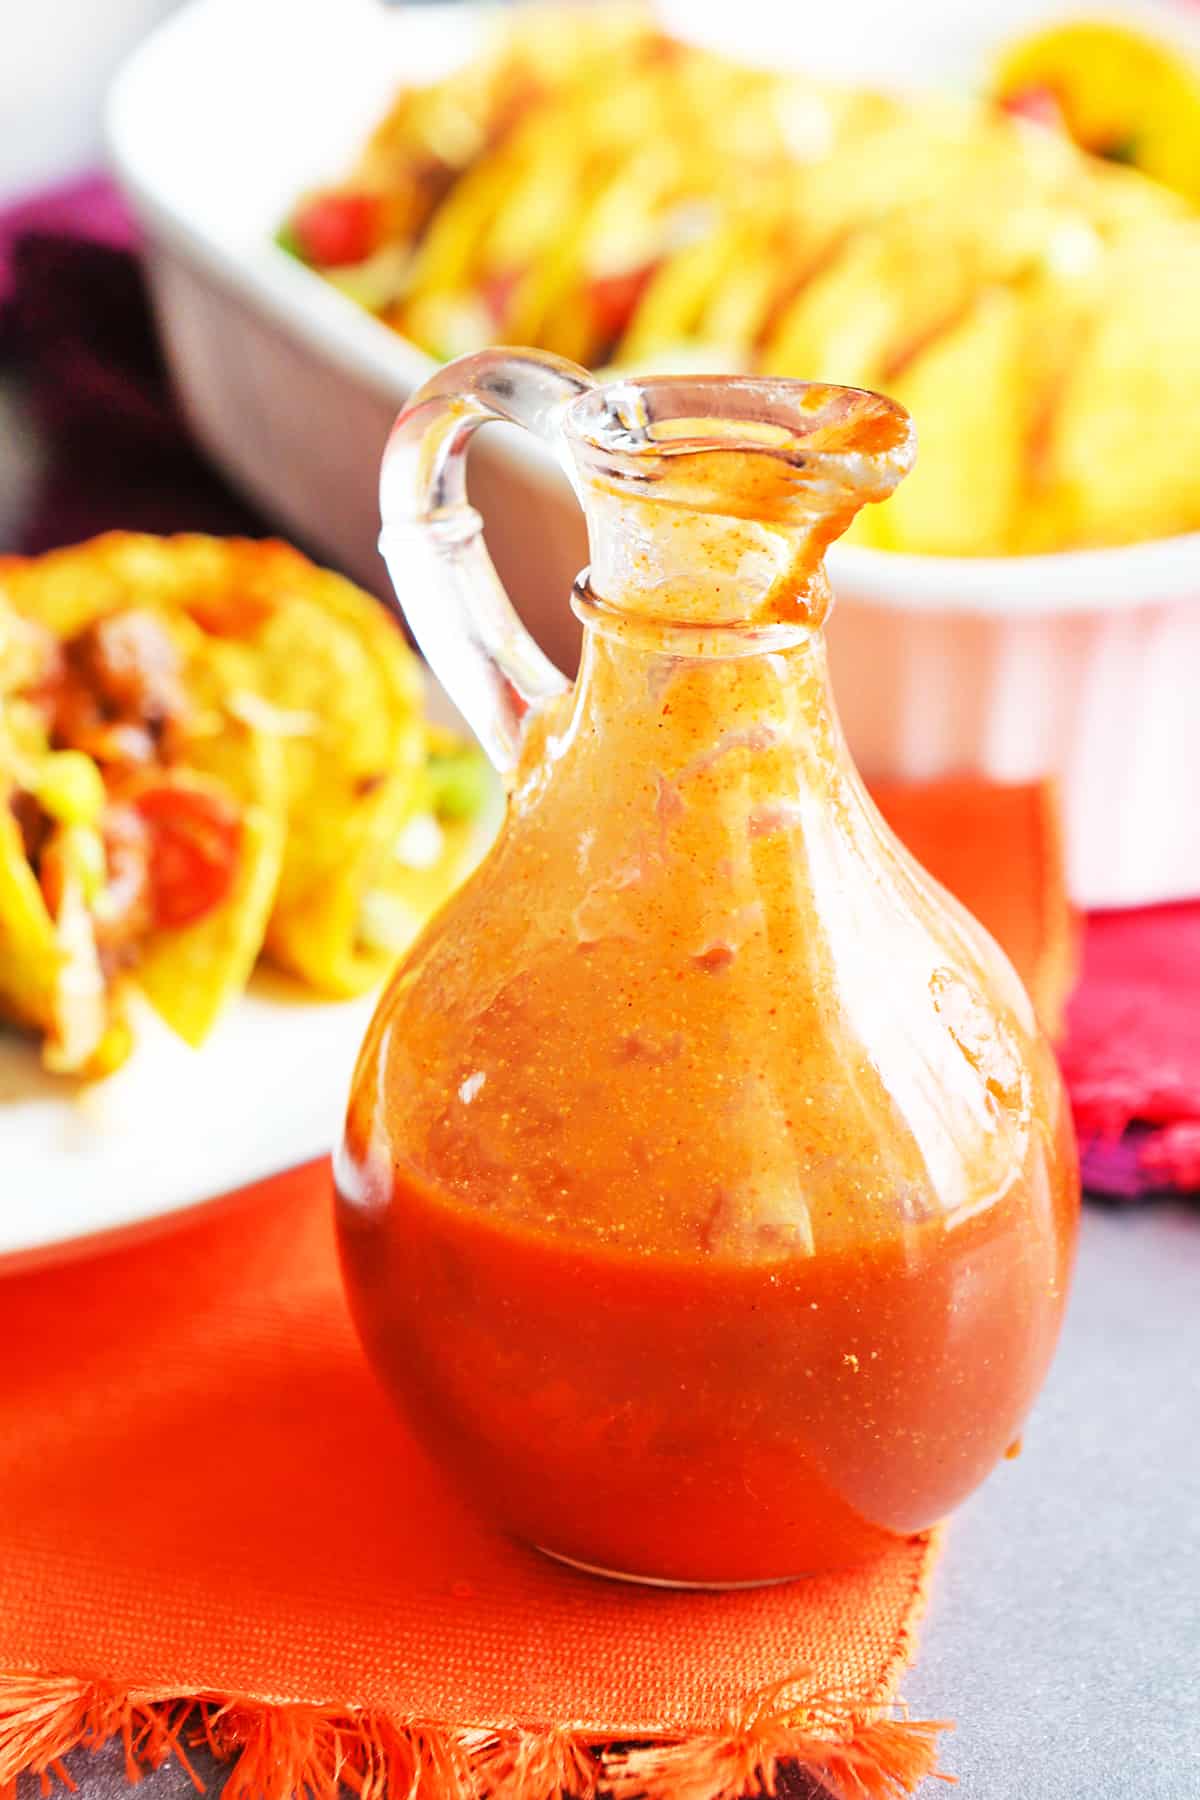 Jar of taco sauce sitting next to hard shell tacos.